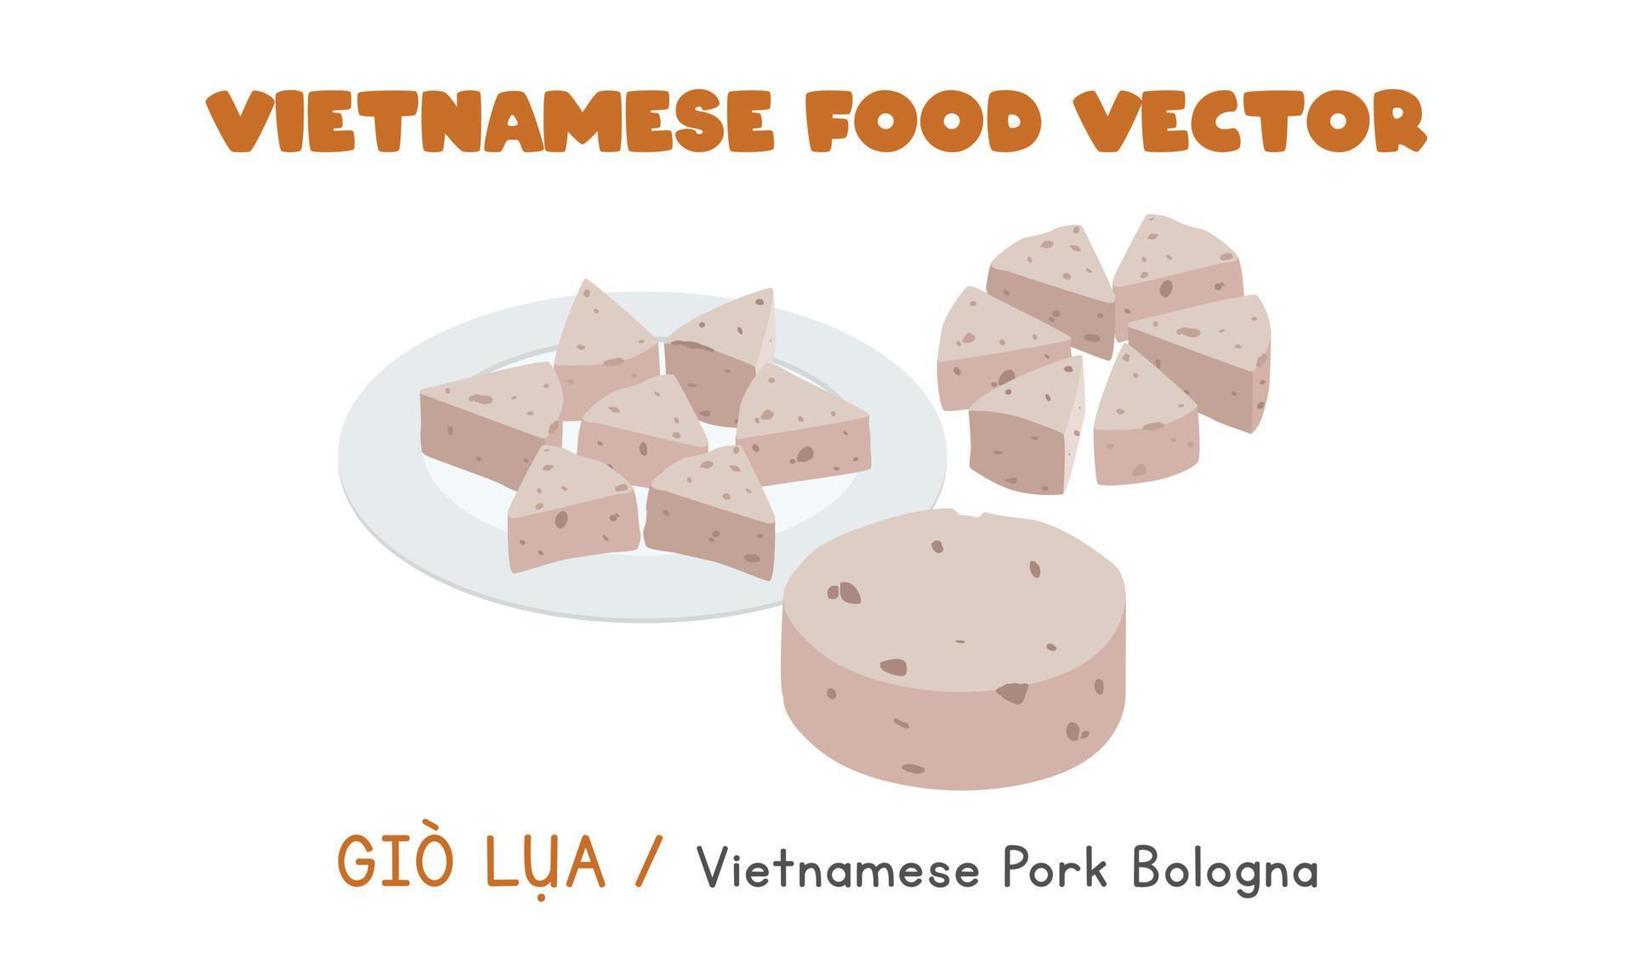 Vietnamese pork bologna or pork sausage flat vector design. Cha Lua, Gio Lua clipart cartoon style. Asian food. Vietnamese cuisine